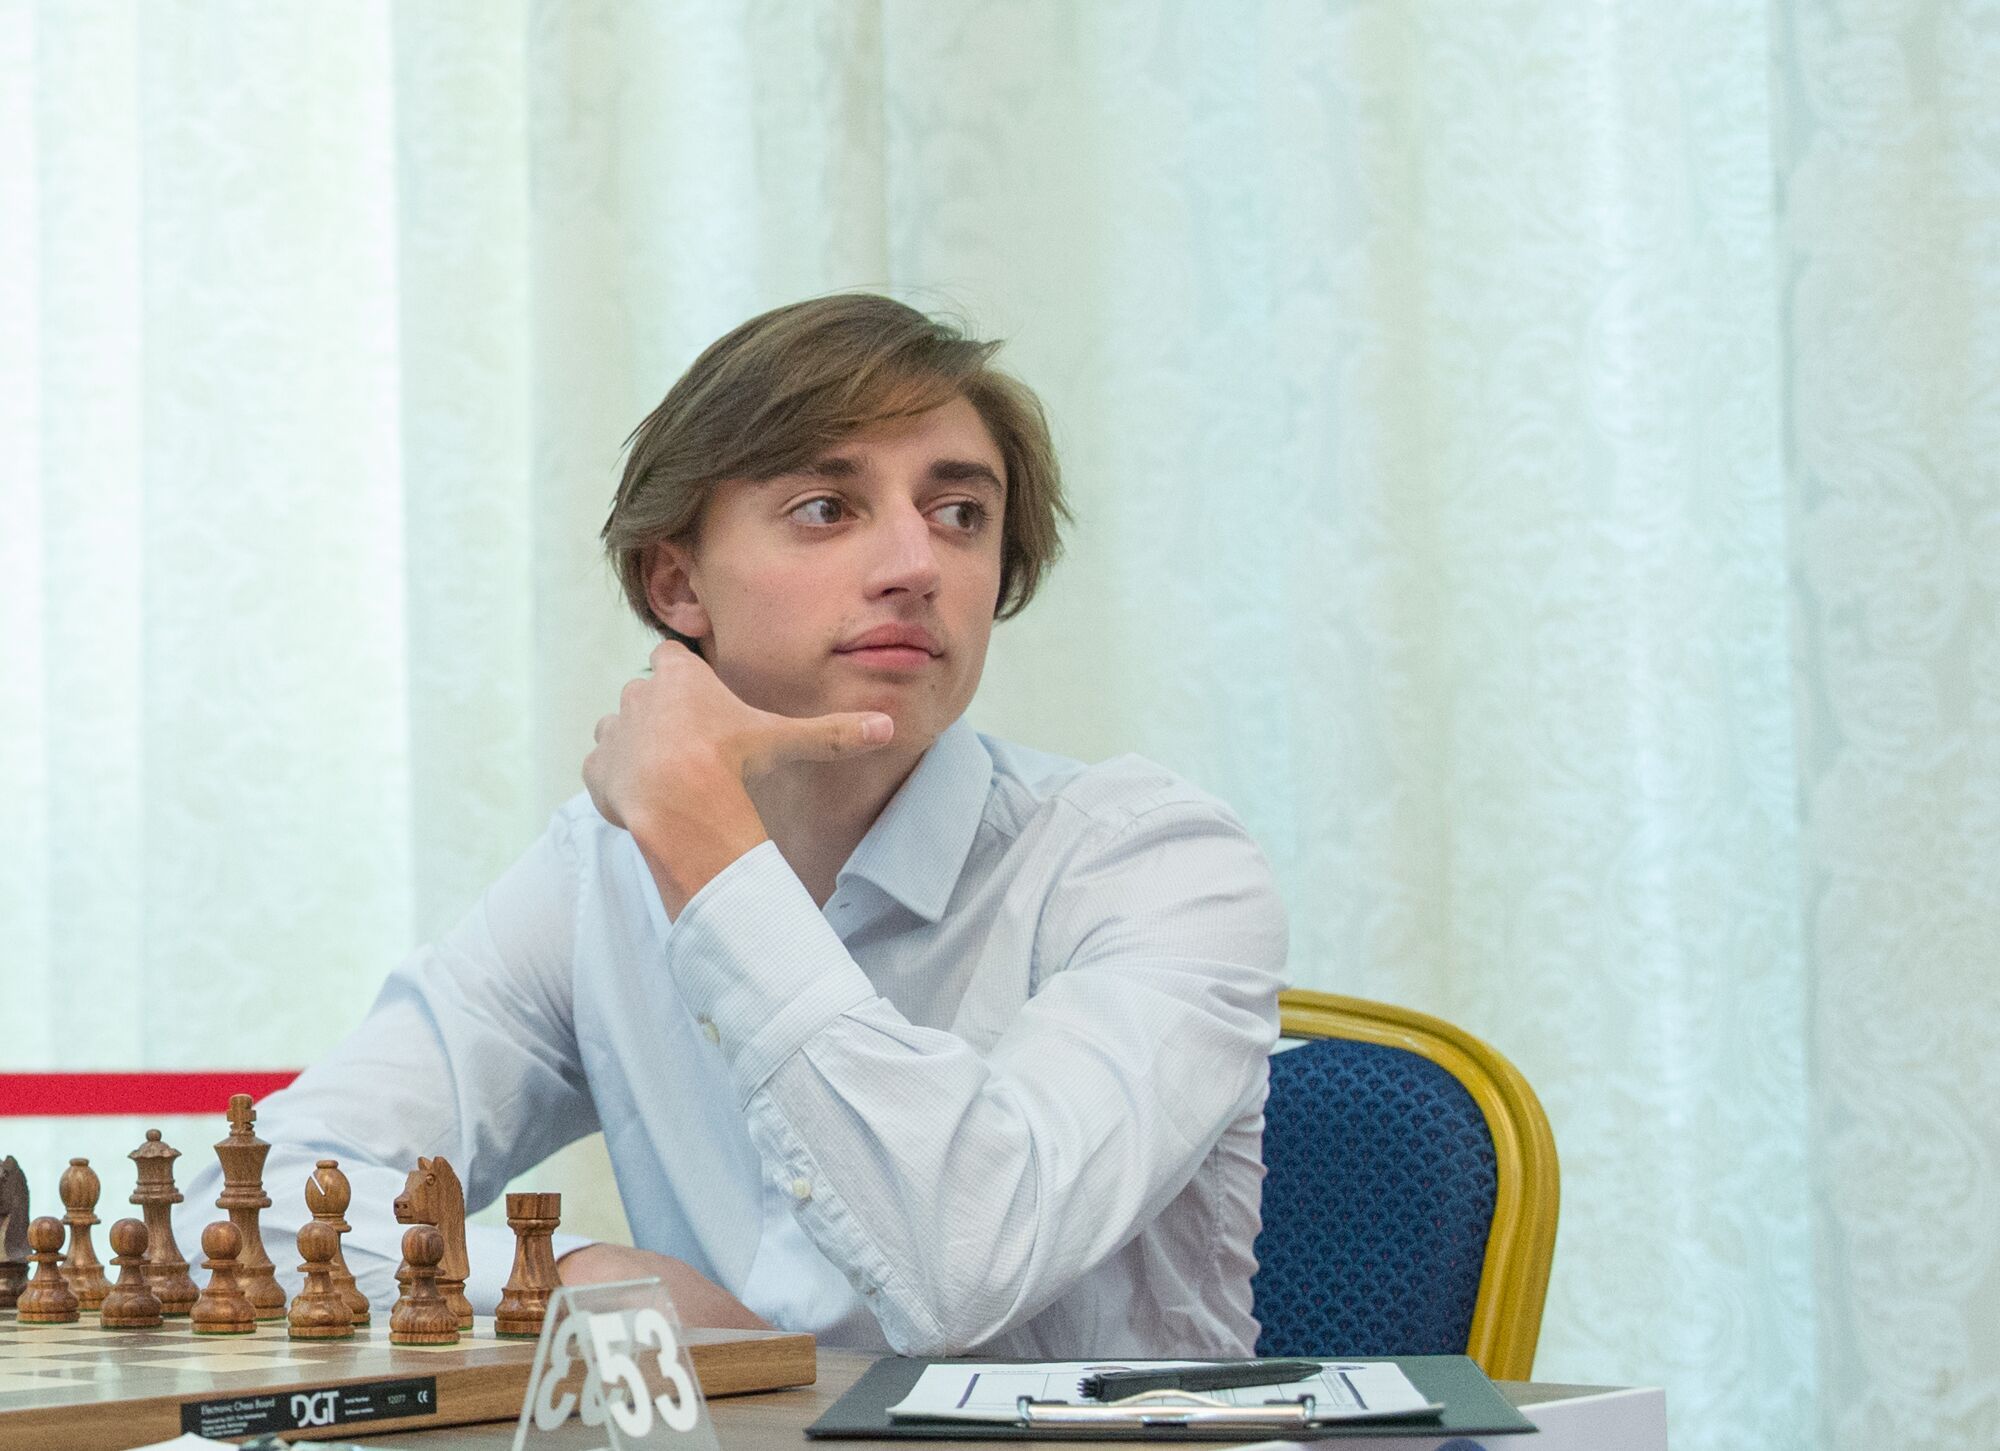 International Chess Federation on X: Daniil Dubov leads #SteinitzMemorial  after Day 2: 1️⃣ Dubov - 8 out of 12 2️⃣ Carlsen - 7½ 3️⃣ Mamedyarov - 7  4-5. Le Quang Liem, Svidler 